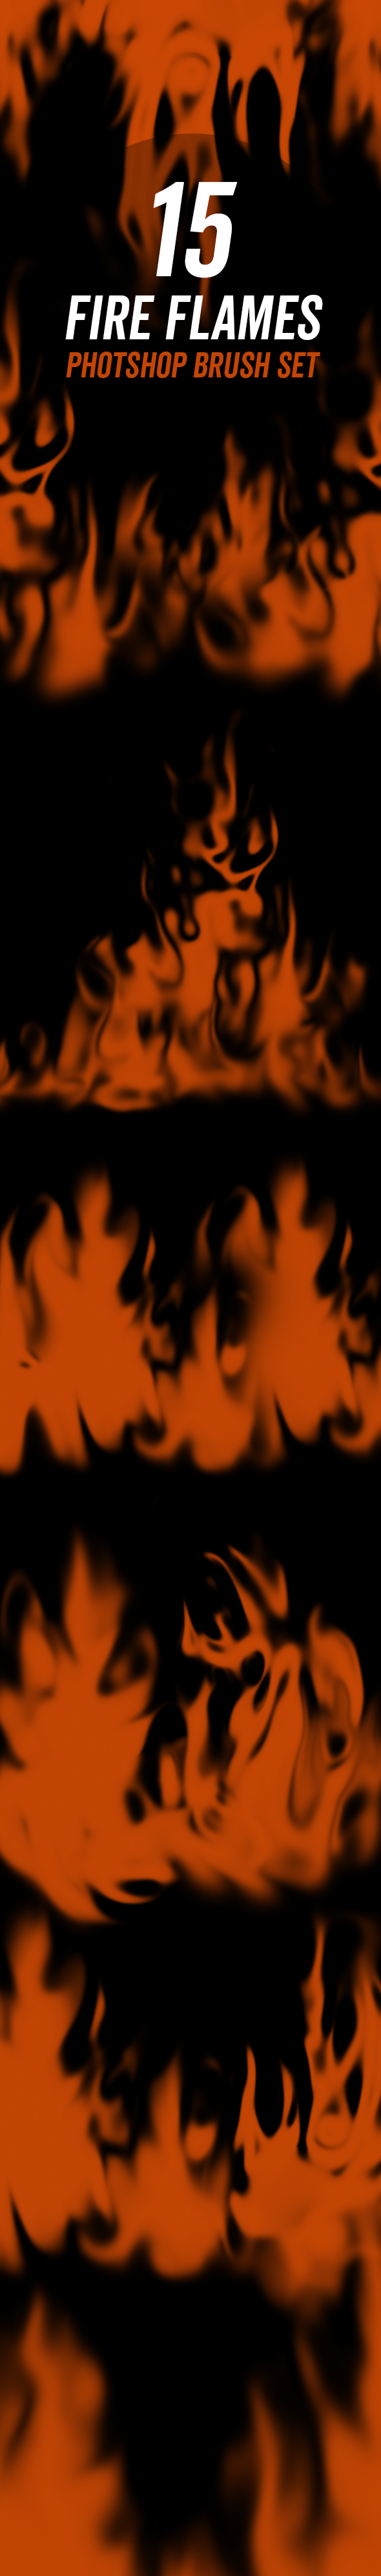 fire-flames-brush-setArtboard 1